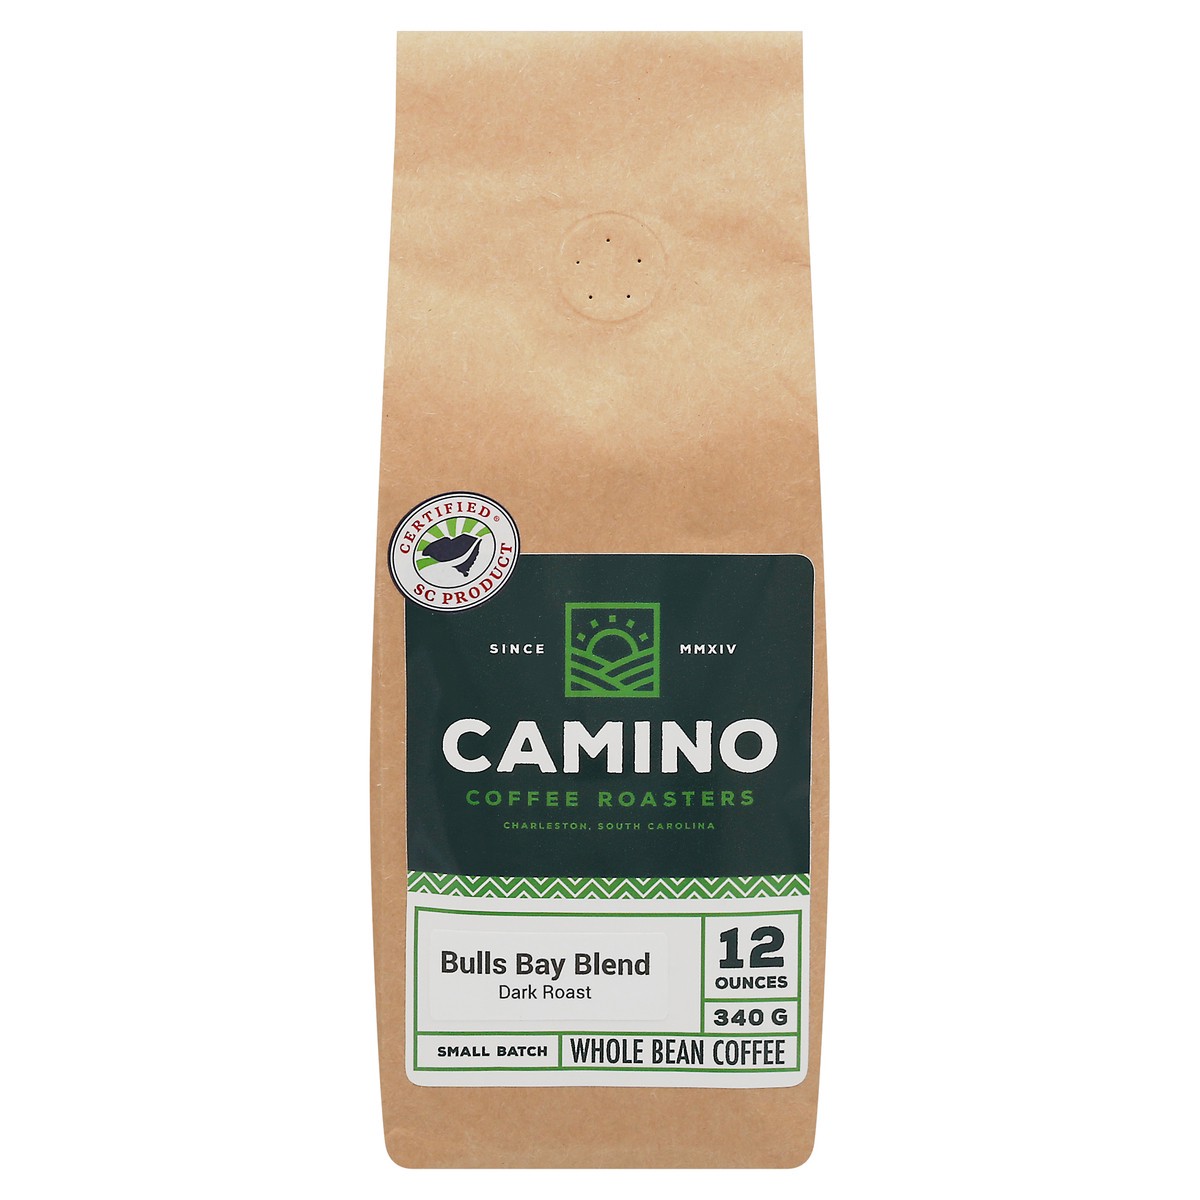 slide 1 of 9, Camino Dark Roast Bulls Bay Blend Whole Bean Coffee 12 oz Bag, 12 oz